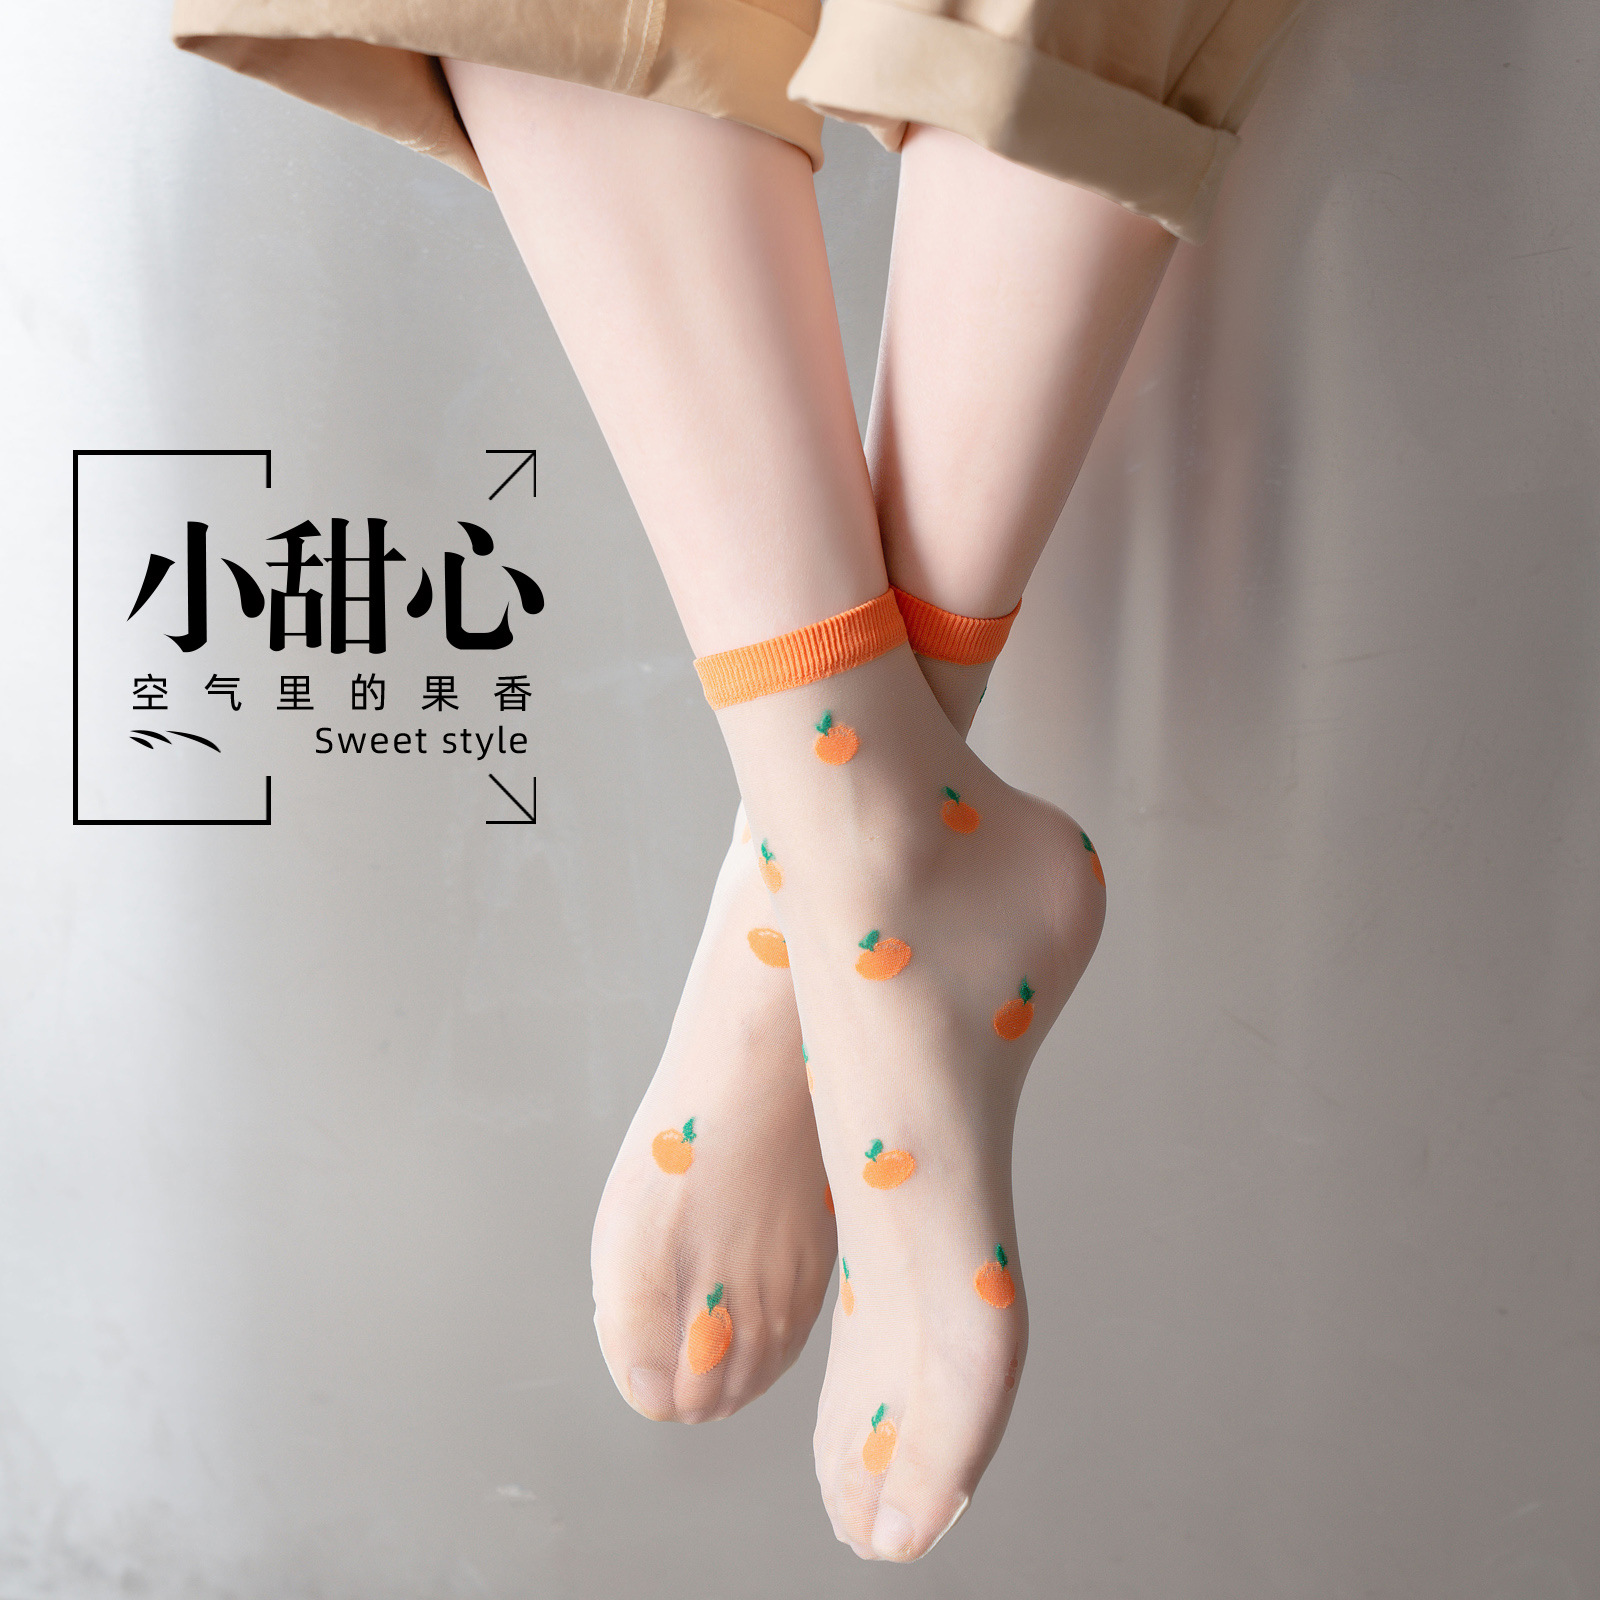 Women's Thin Mid-Calf Length Crystal Glass Stockings Summer Cute Sweet Fruit Blossom Transparent Ice Socks